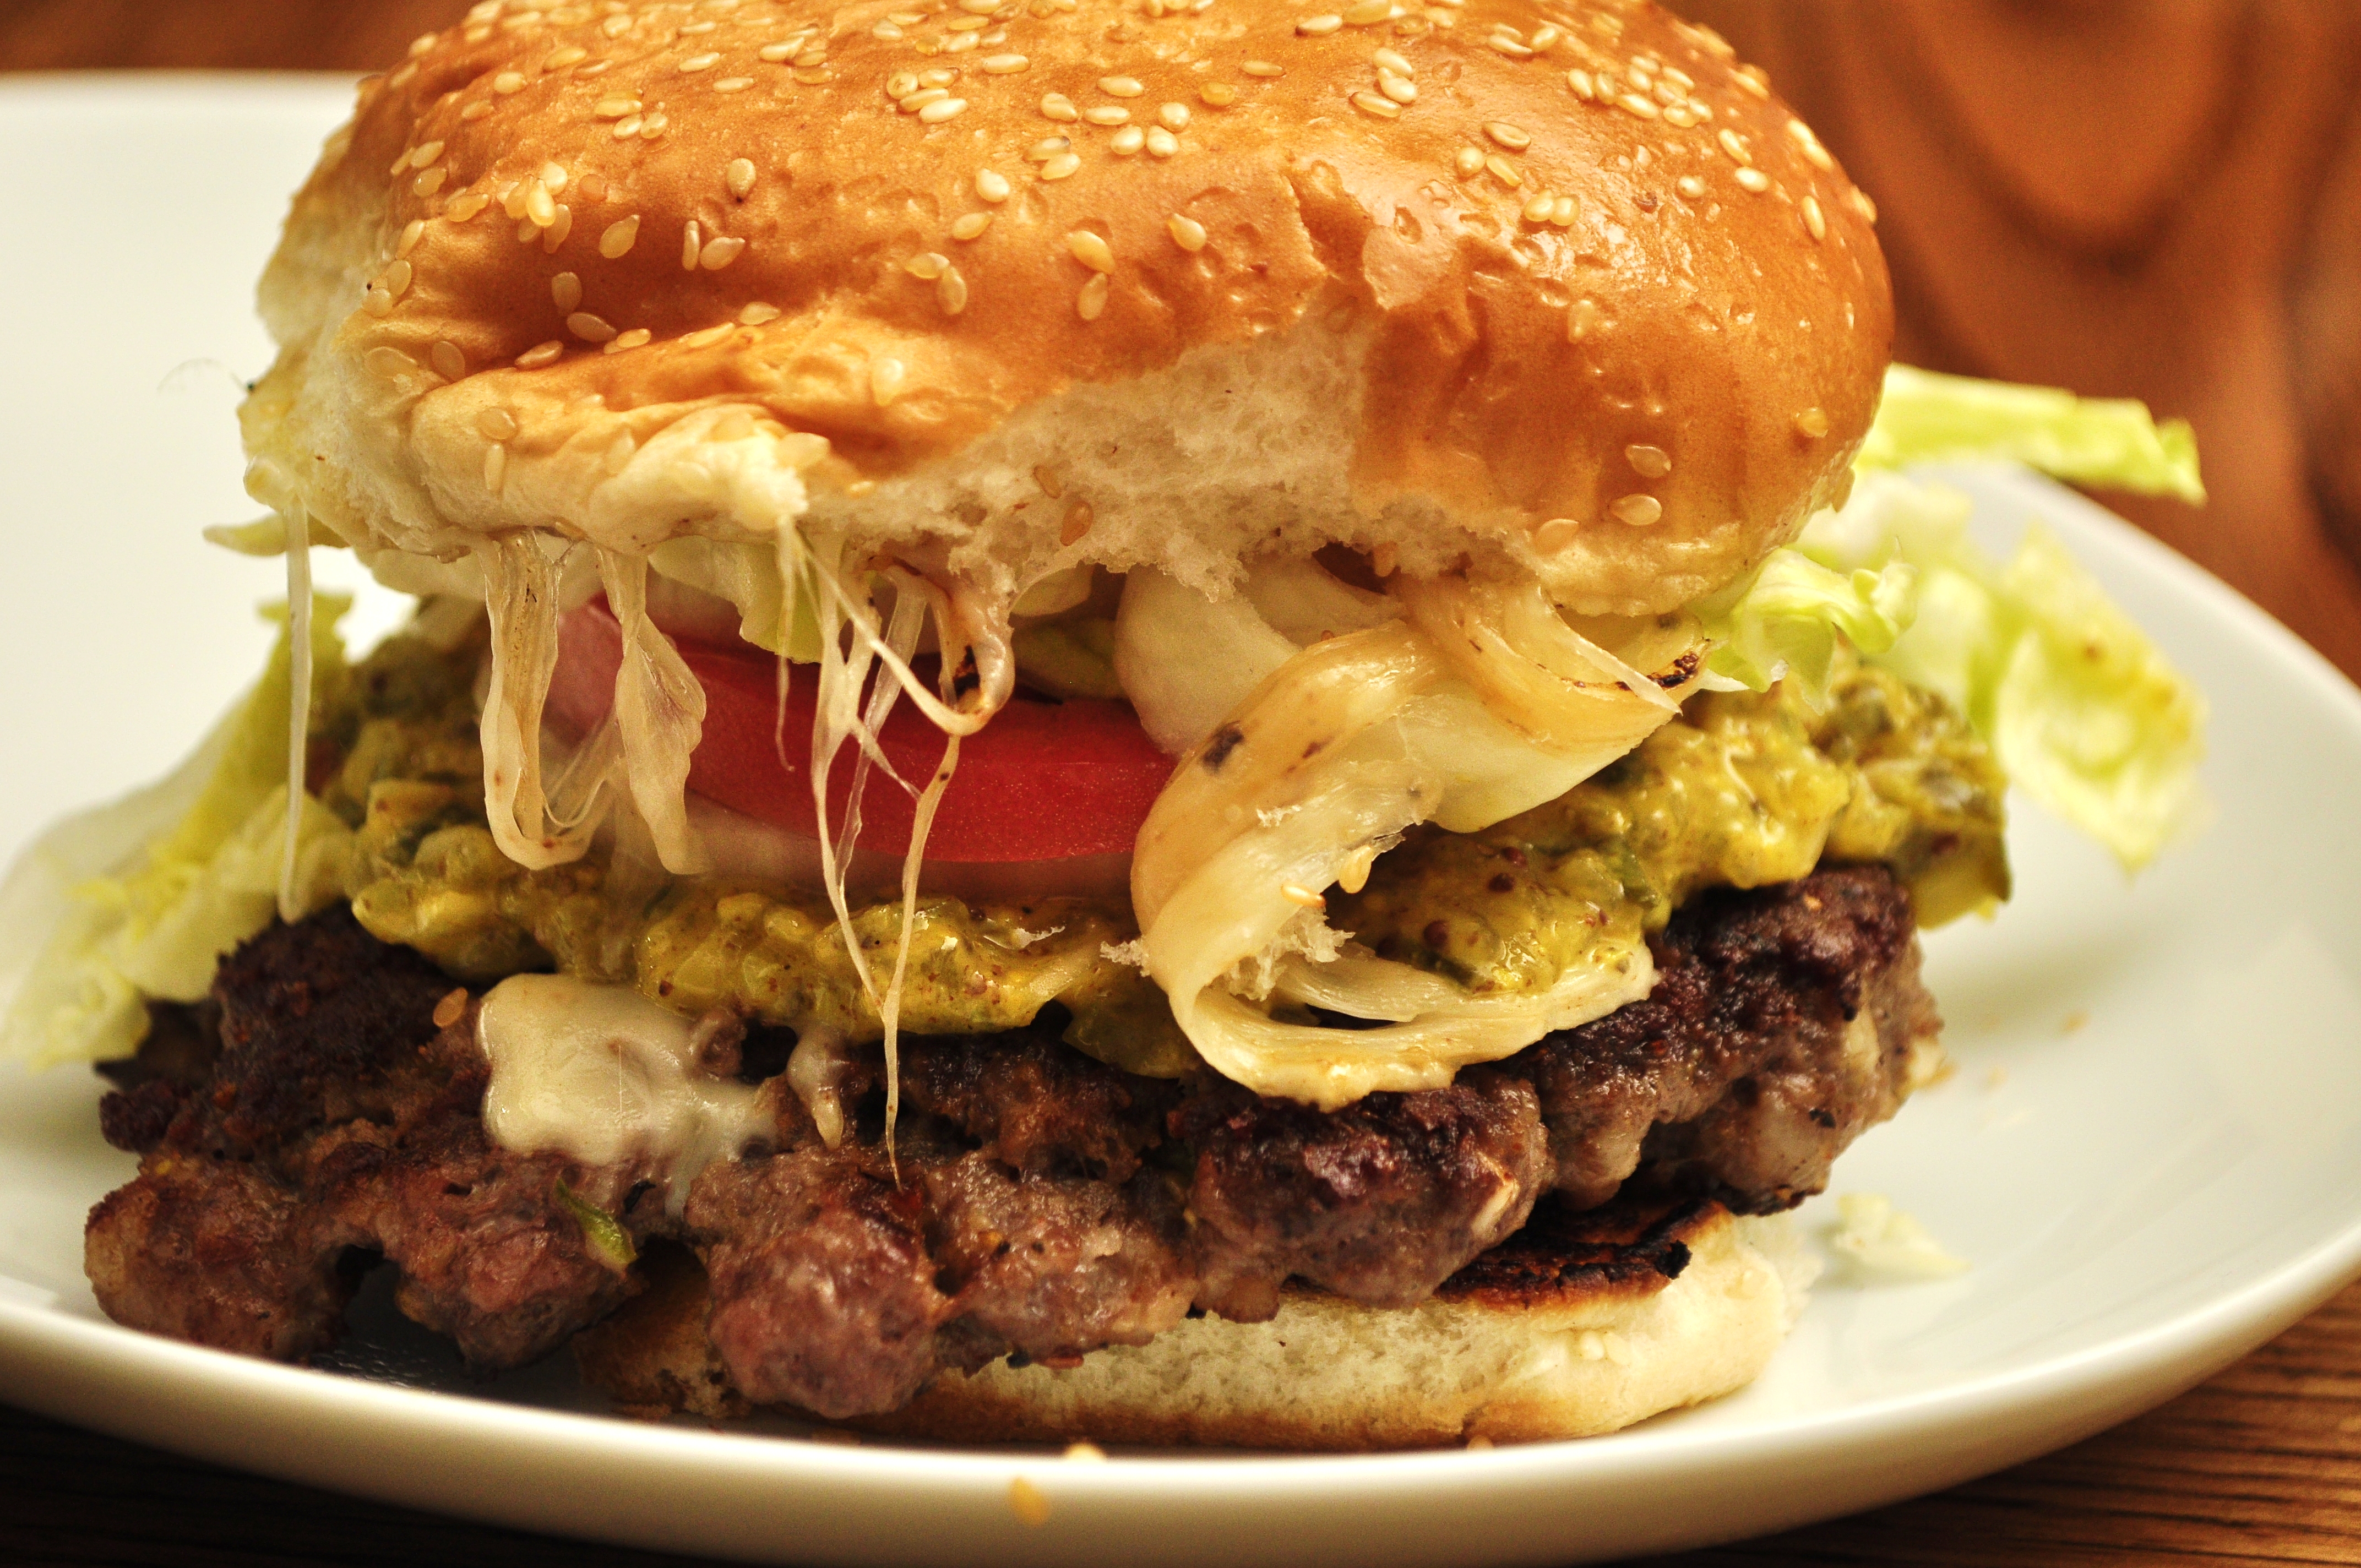 File:Hamburger (2).jpg - Wikimedia Commons